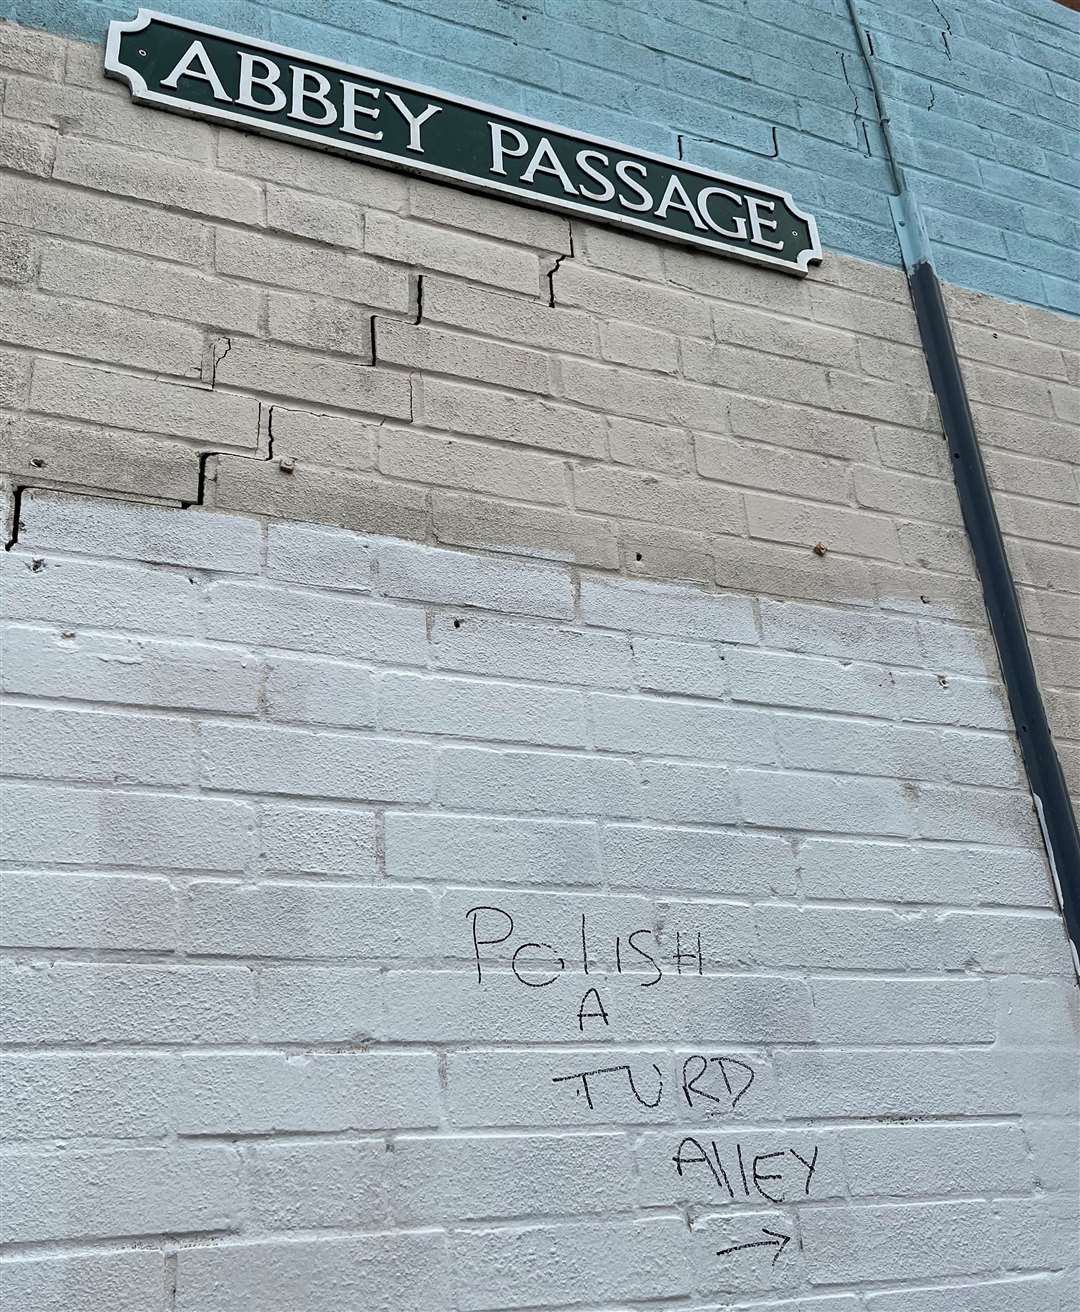 New graffiti on Abbey Passage in Spalding